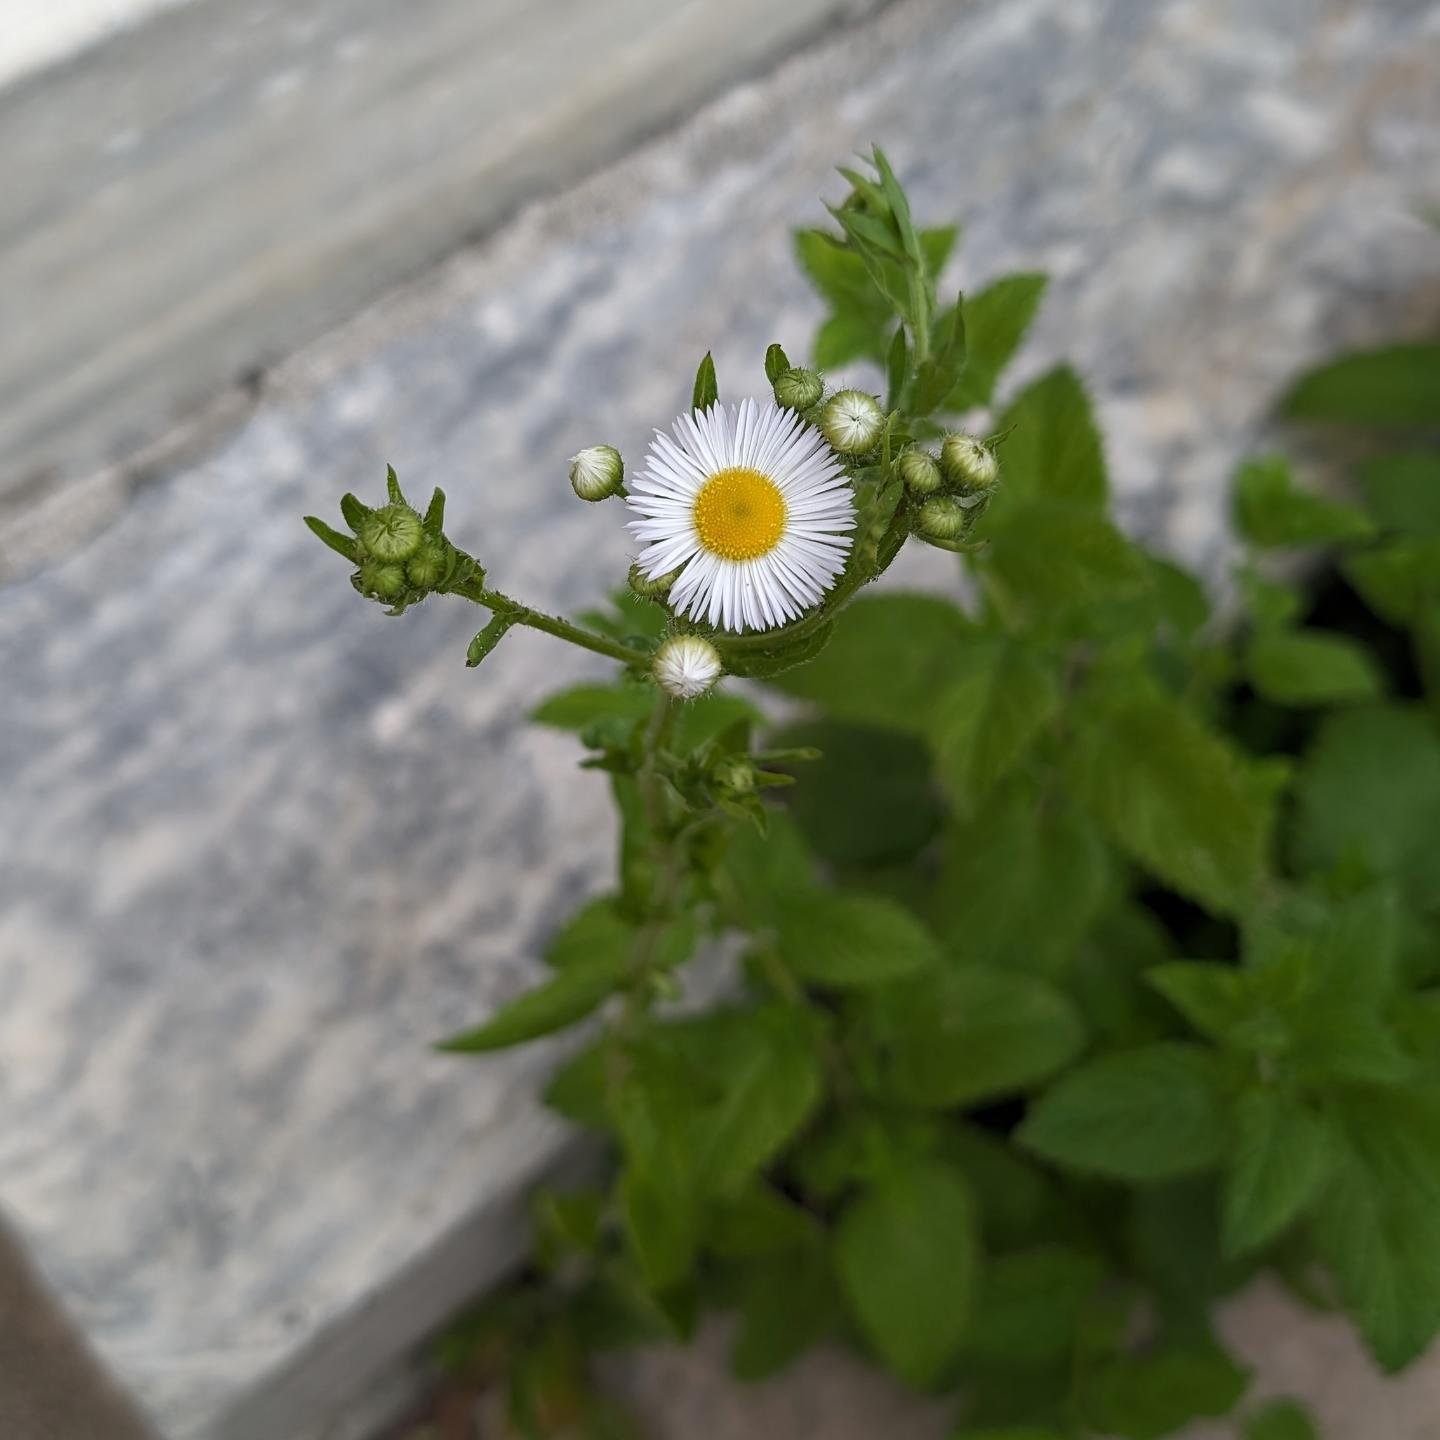 One little flower.